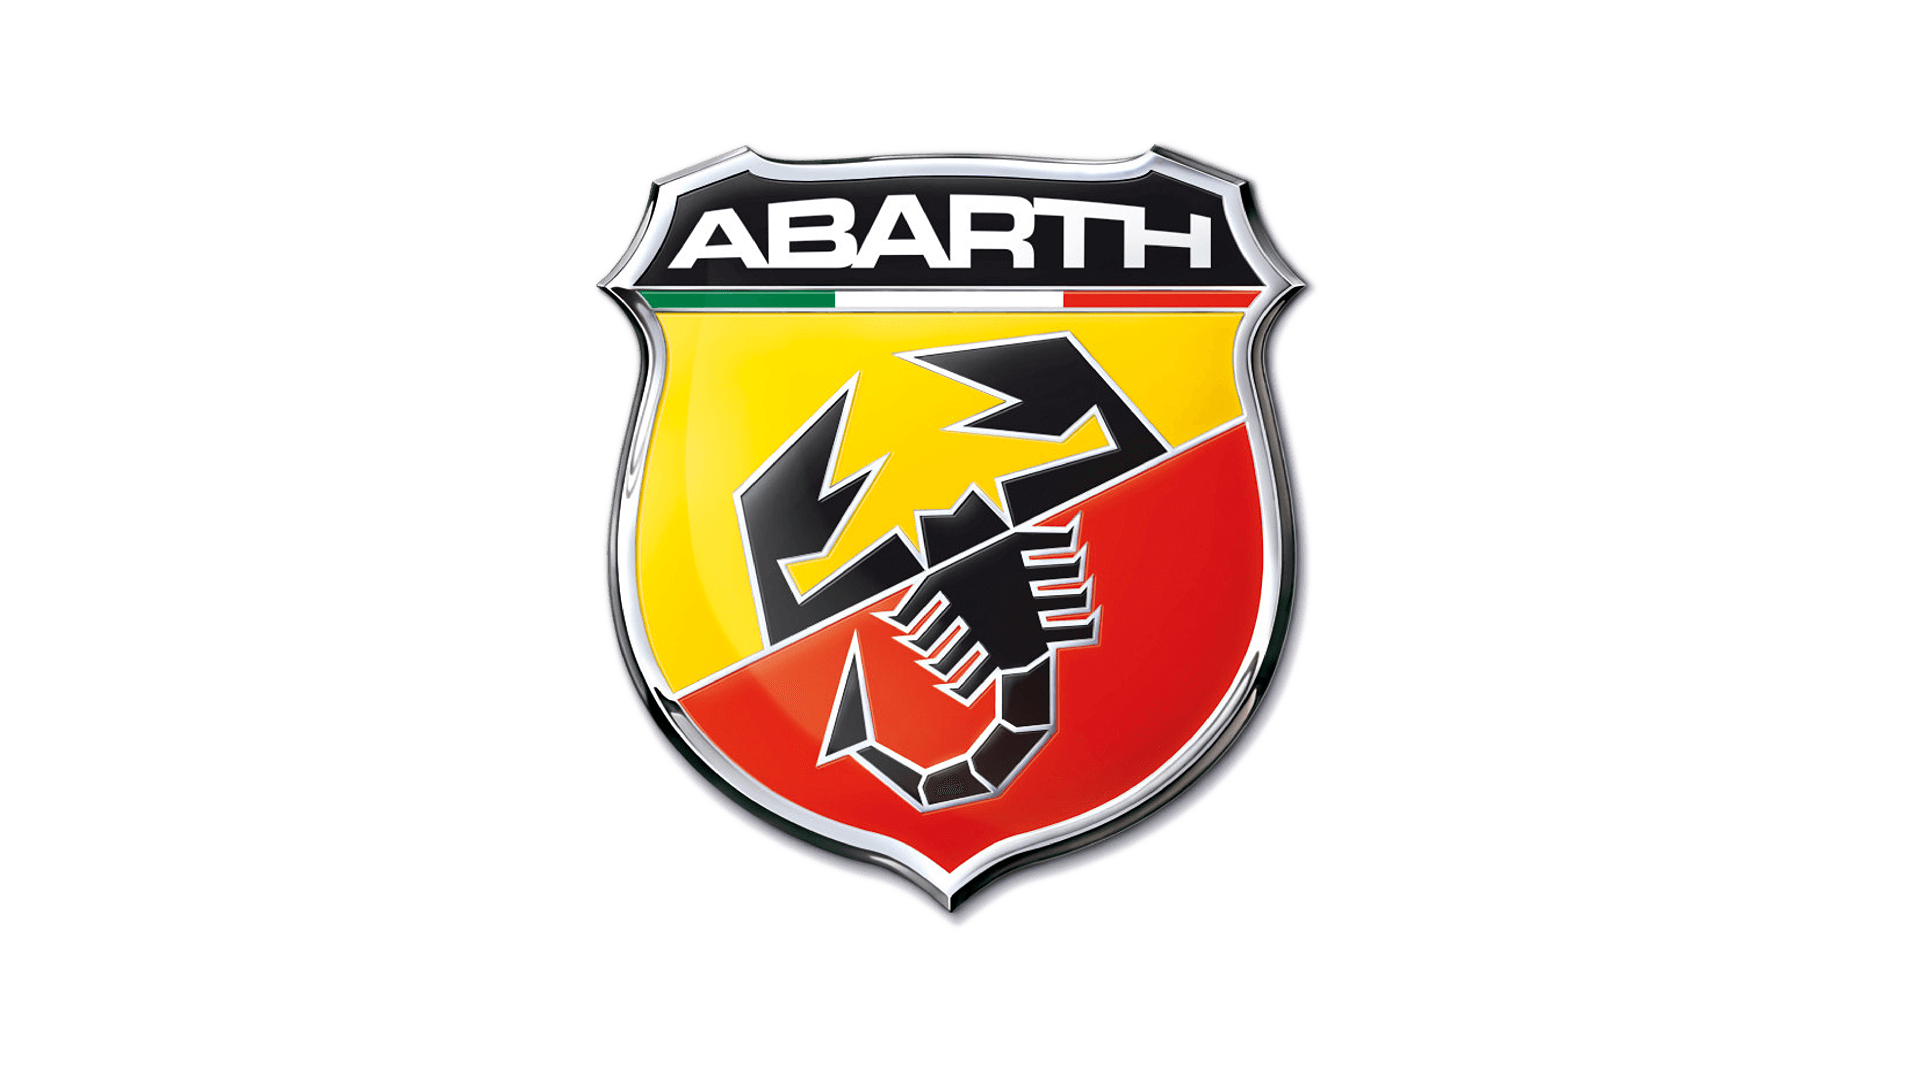 Fiat 595: Abarth's Automotive Revolution